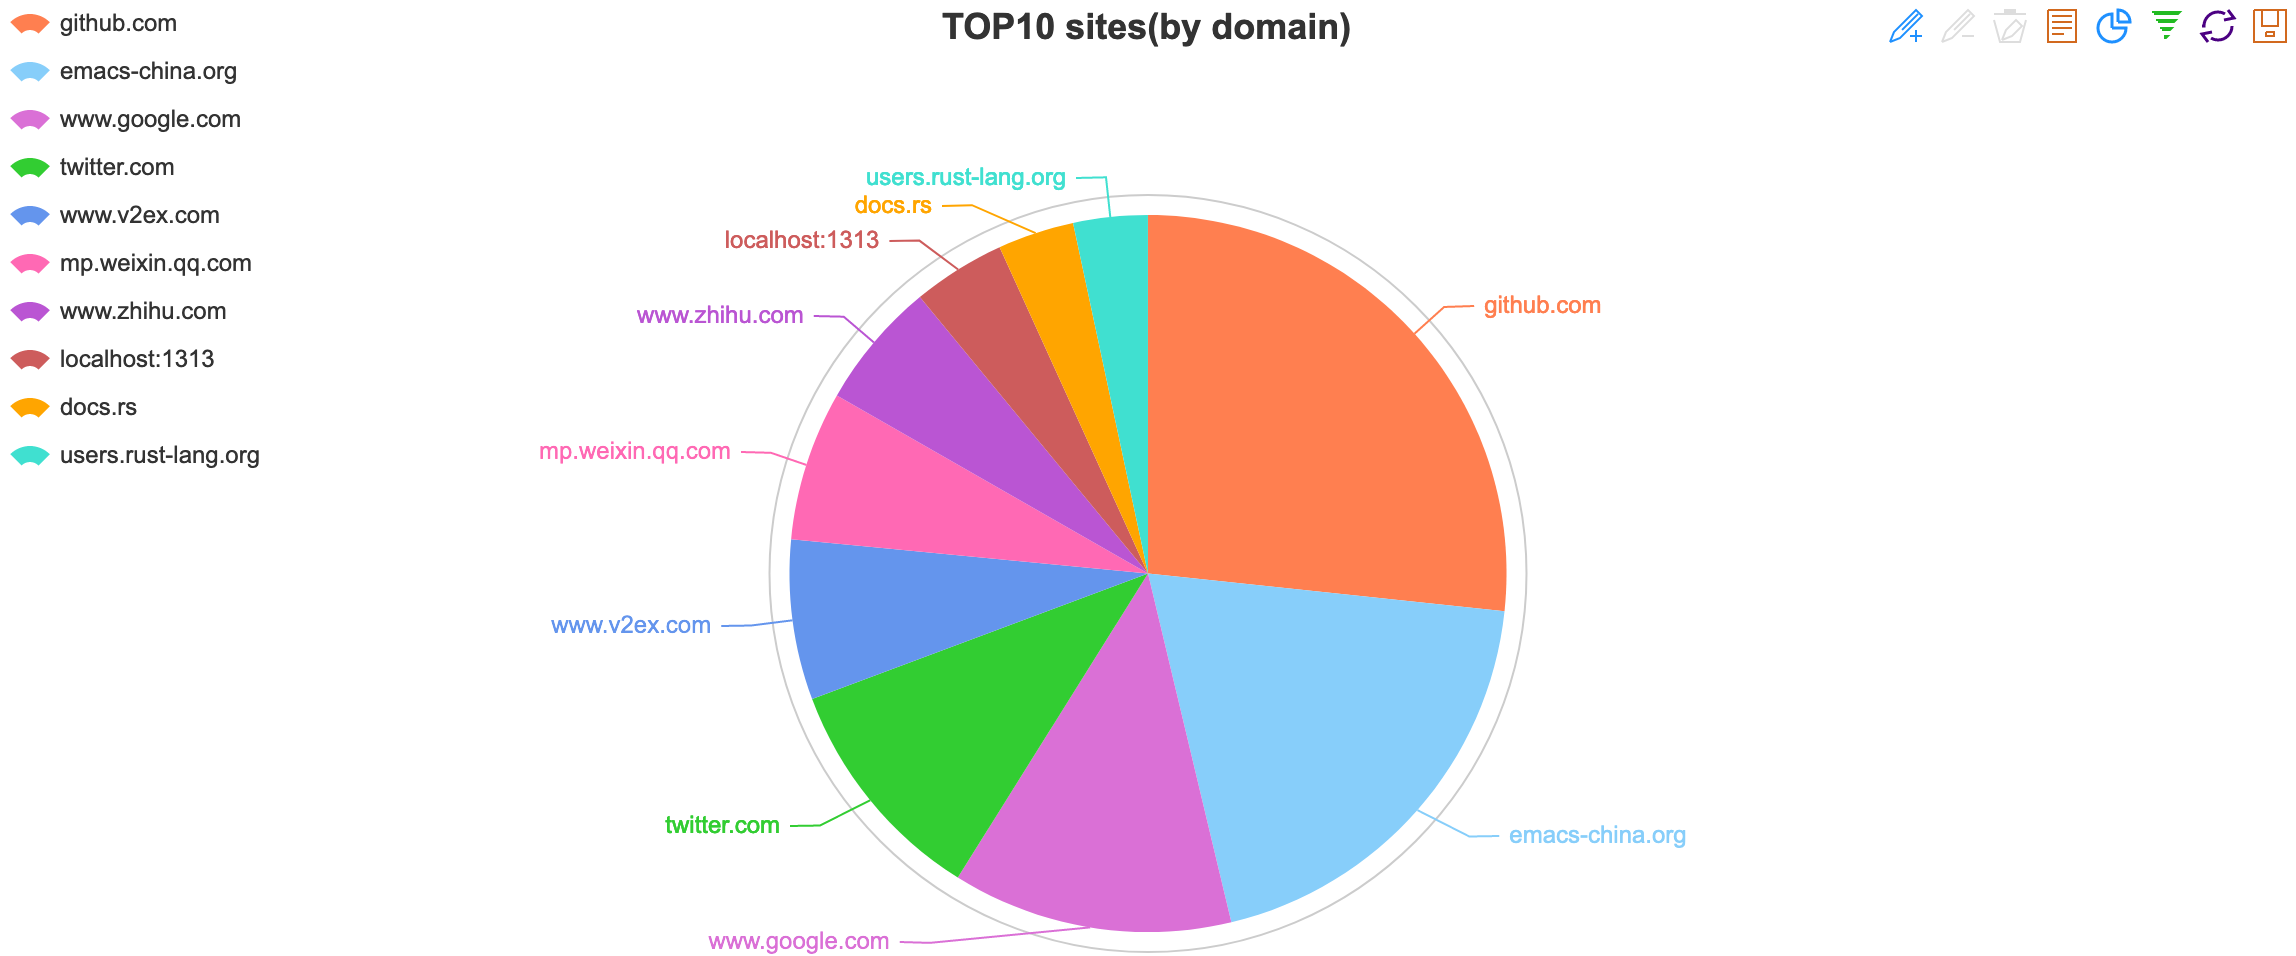 screenshots/top10_domain.png